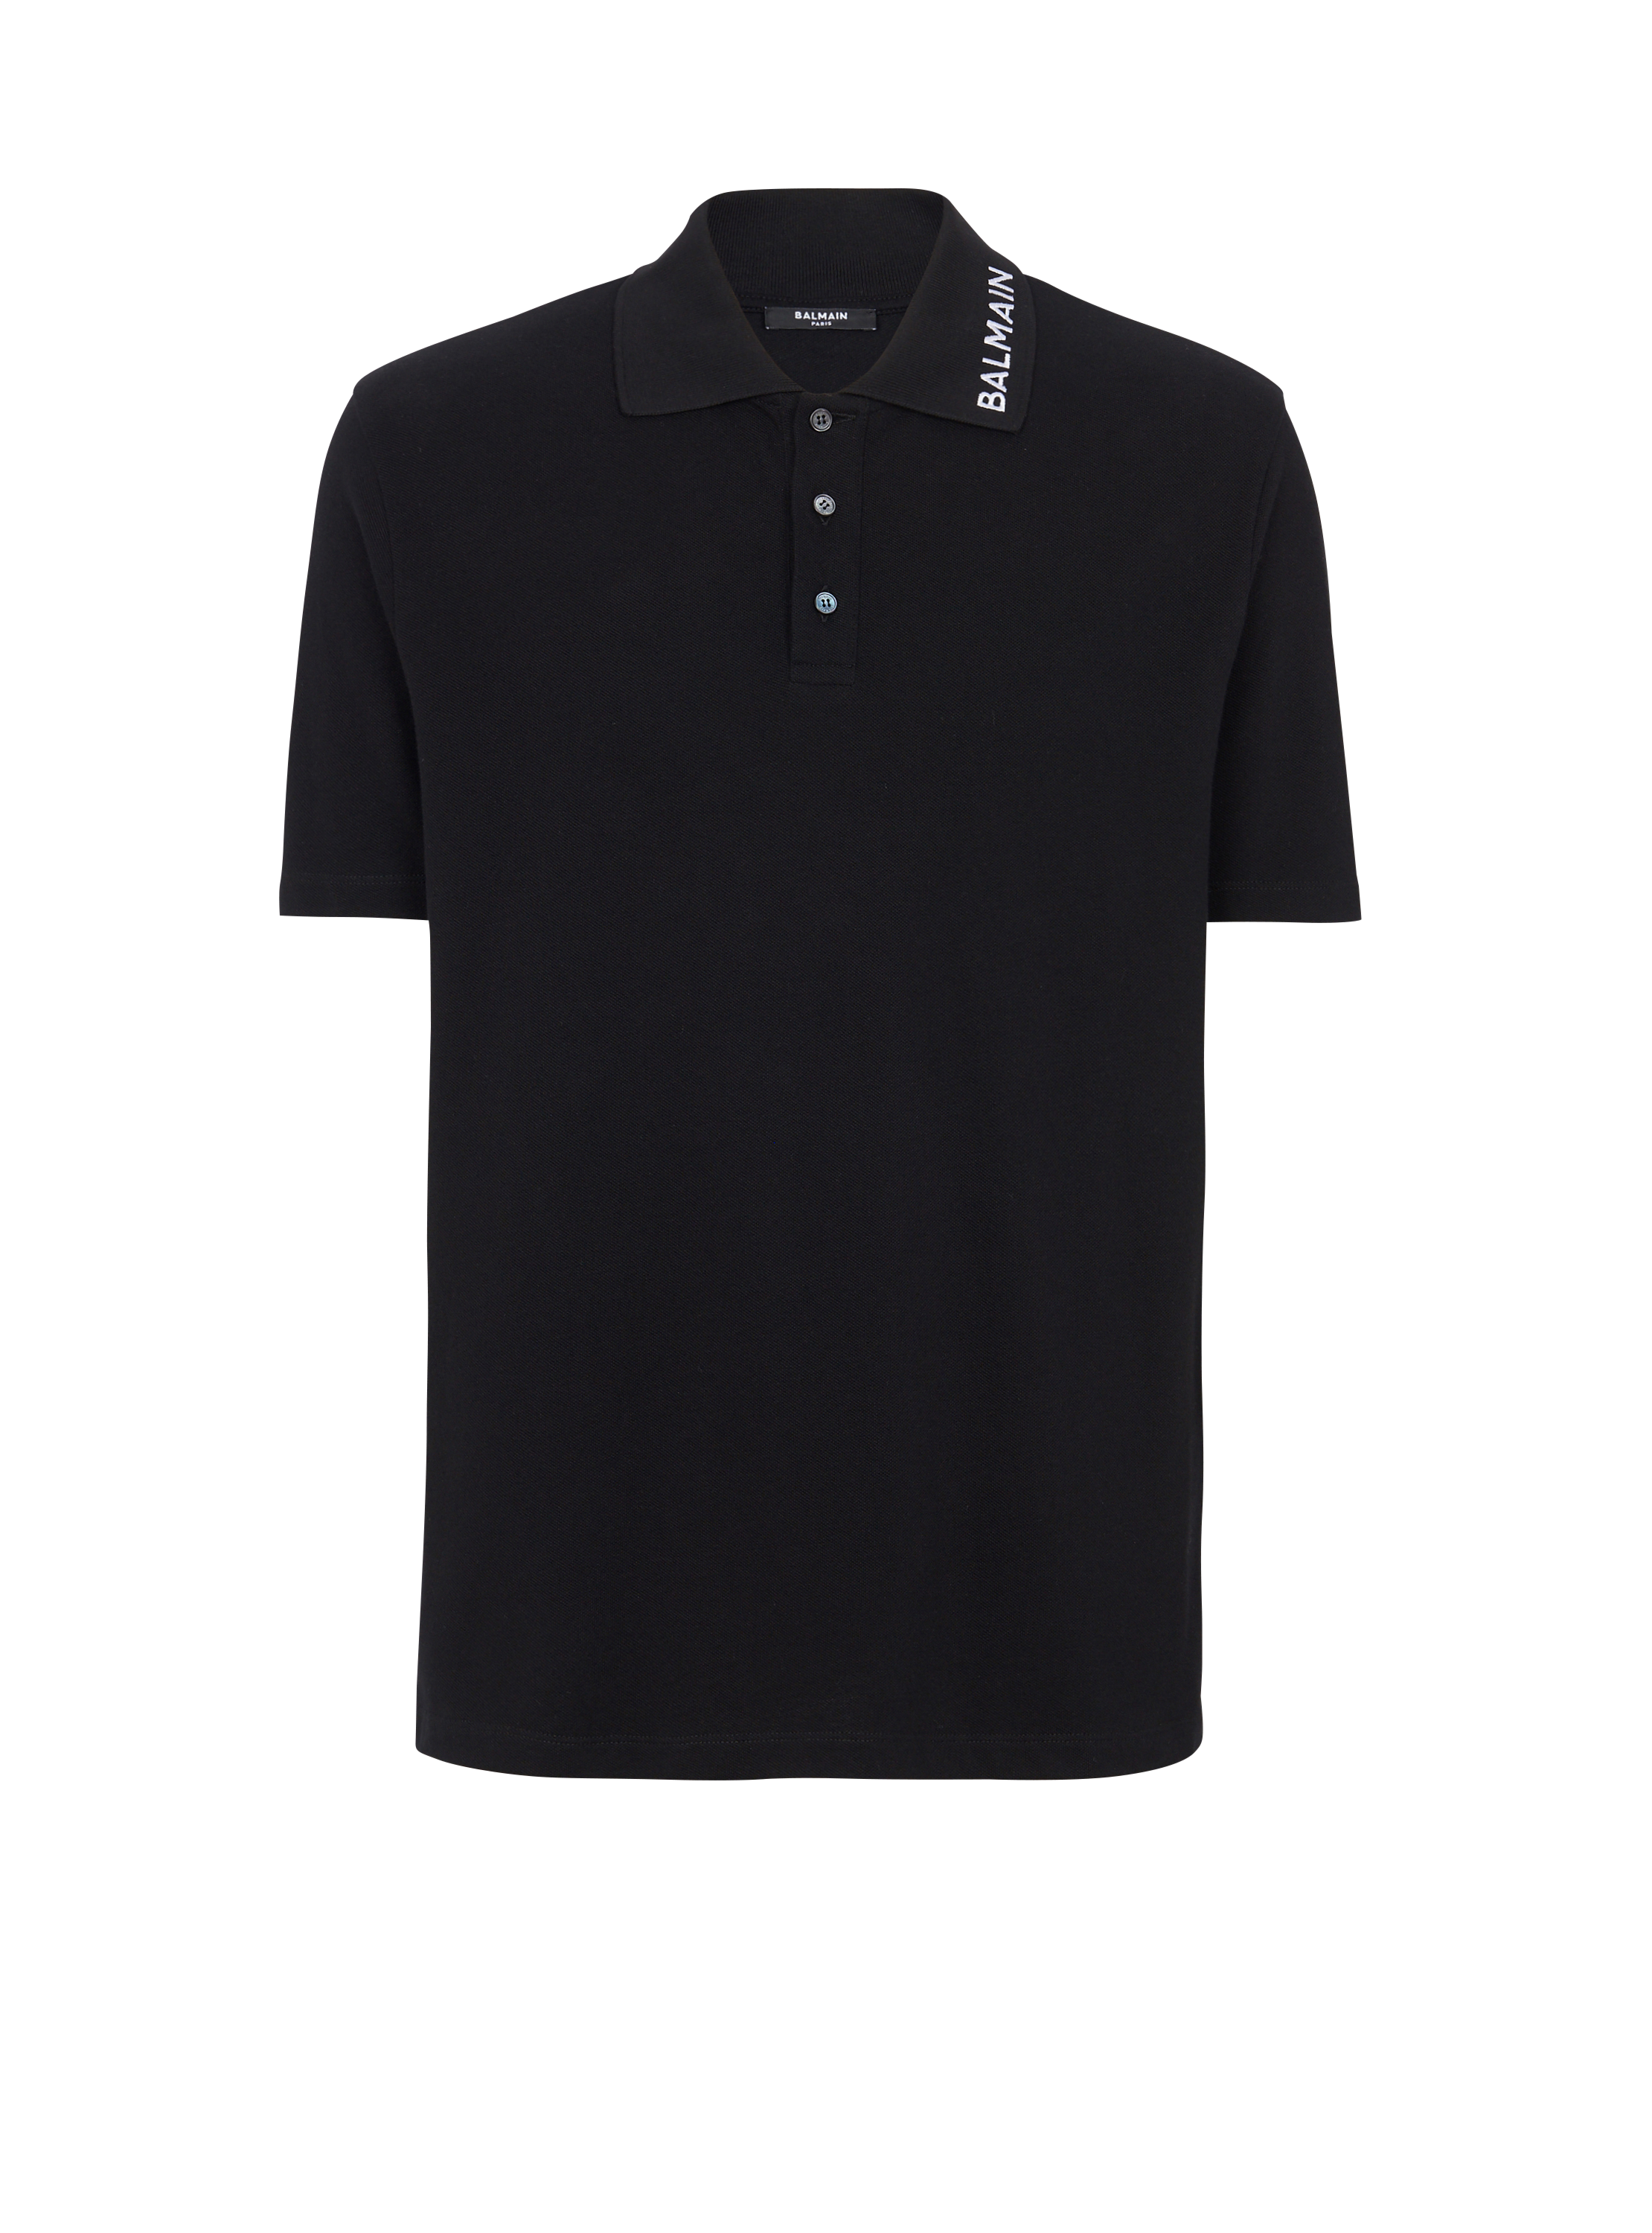 Balmain embroidered polo shirt, black, hi-res